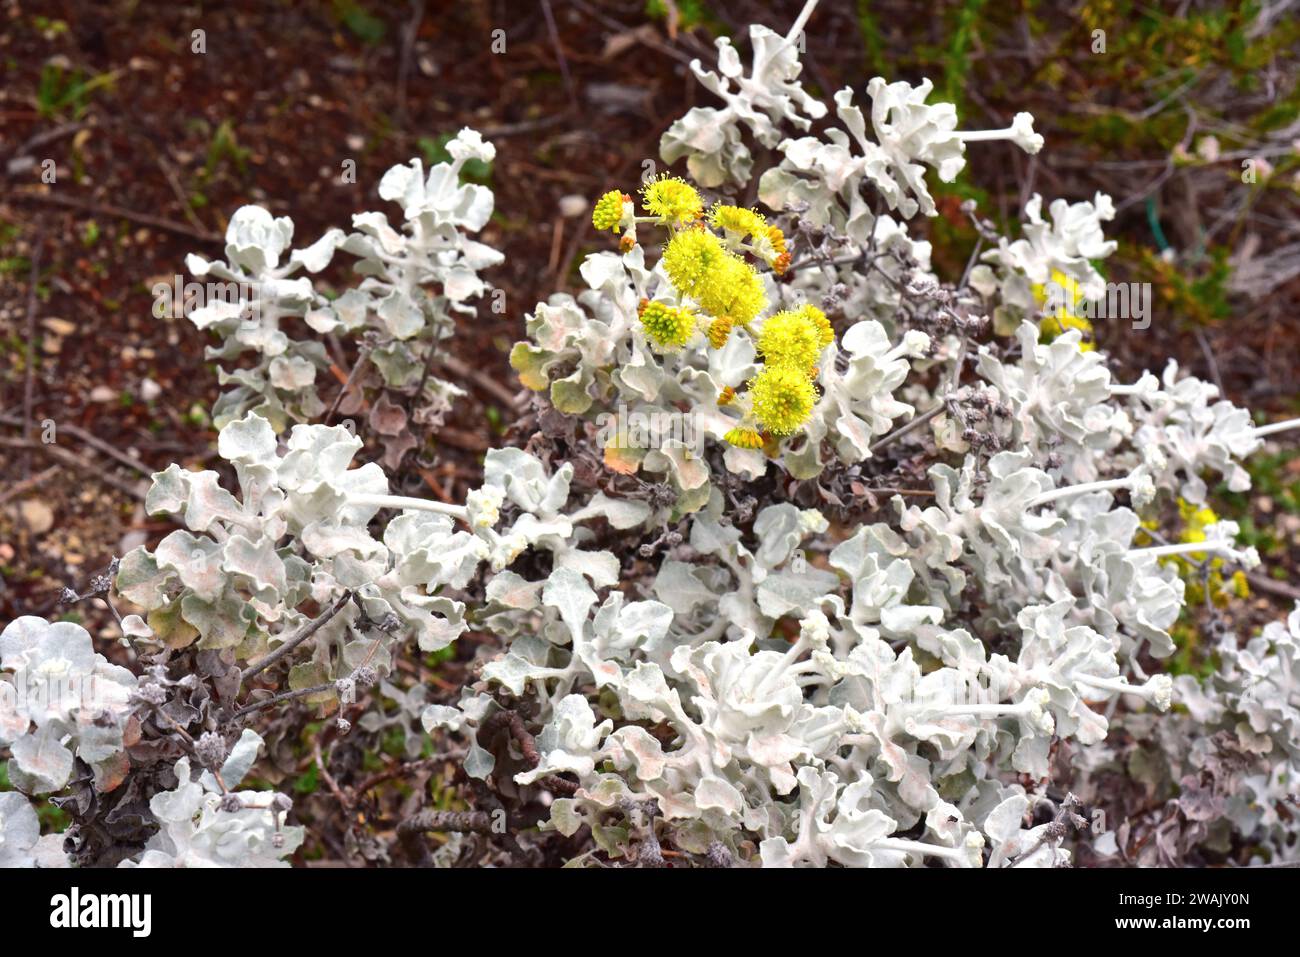 Conejo buckwheat or saffron buckwheat ( Eriogonum crocatum) is a shrub endemic to Conejo Valley, California. Stock Photo